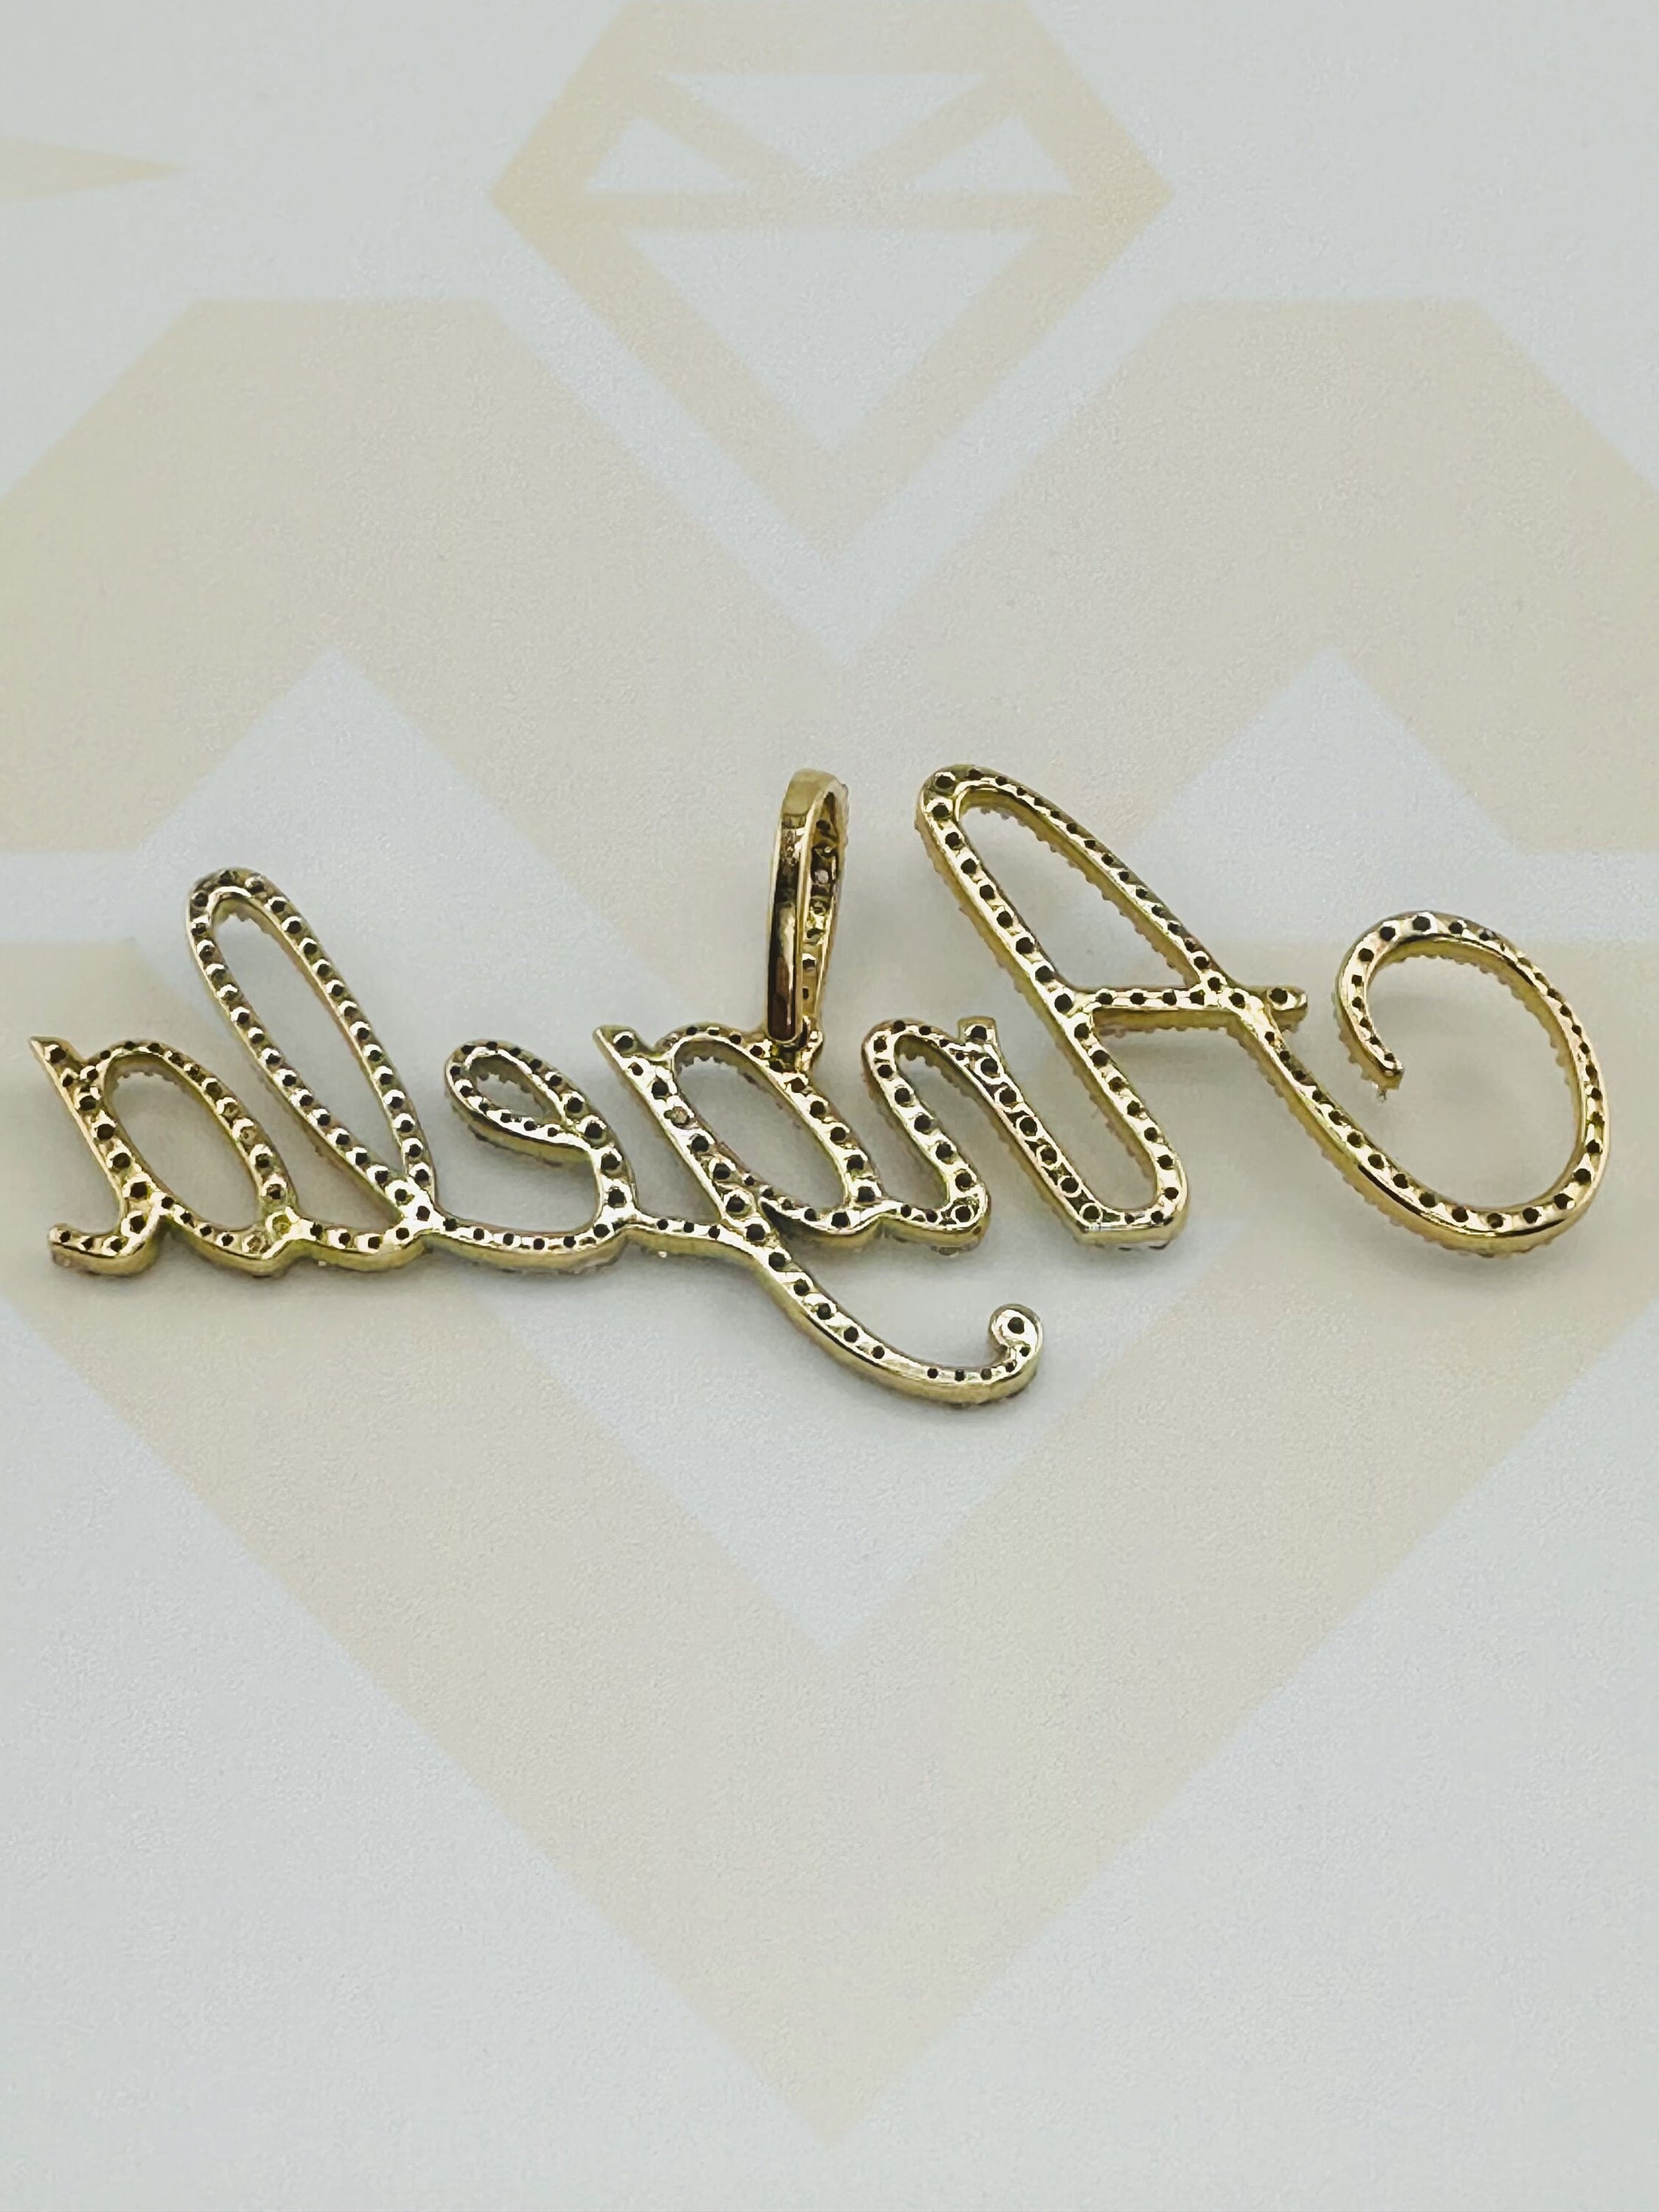 10k solid gold Real Diamond Angela name pendant, personalized name pendant, custom jewelry, FREE Appraisal, Birthday Christmas Anniversary